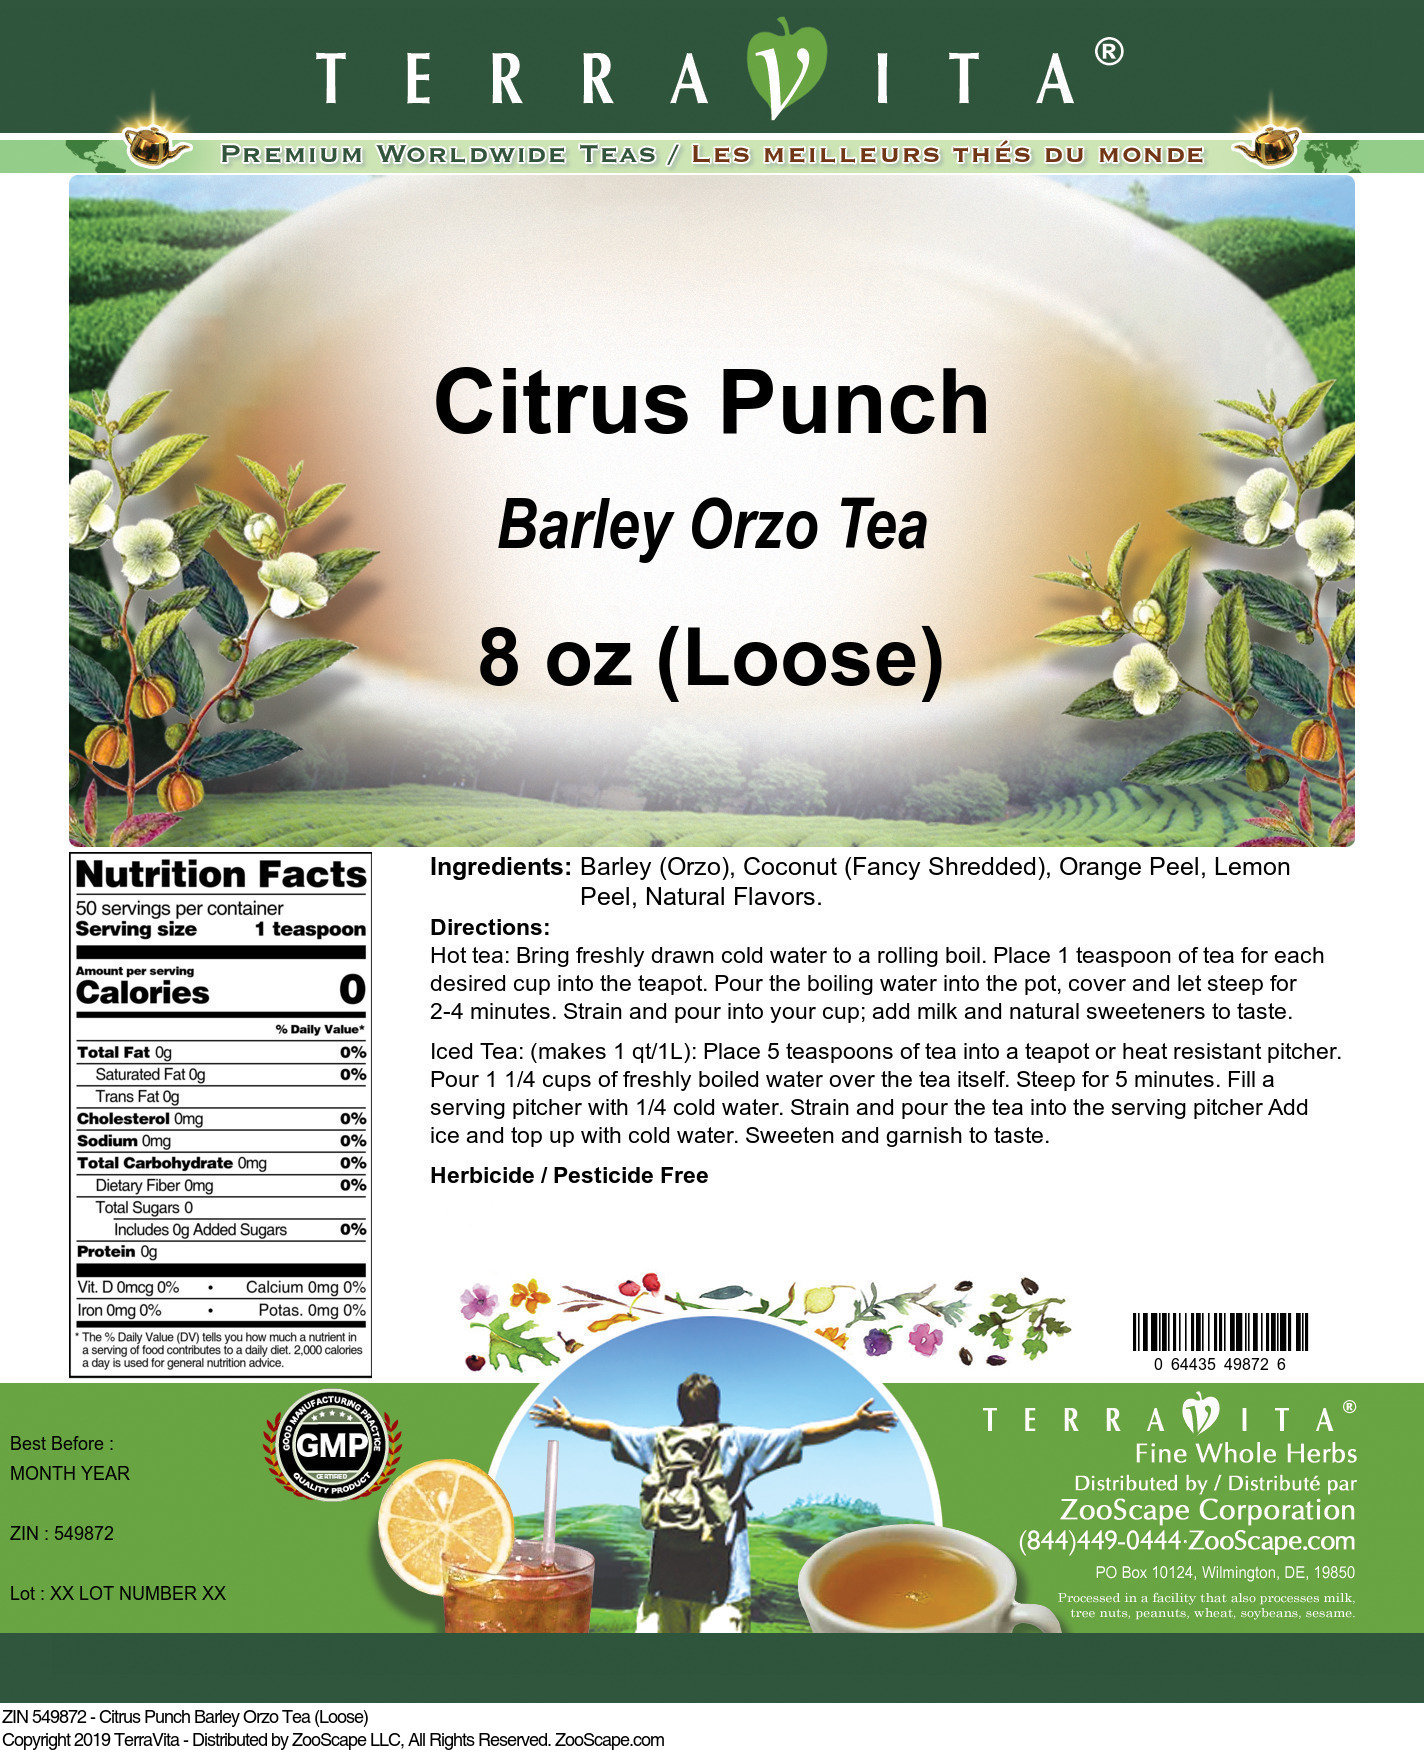 Citrus Punch Barley Orzo Tea (Loose) - Label